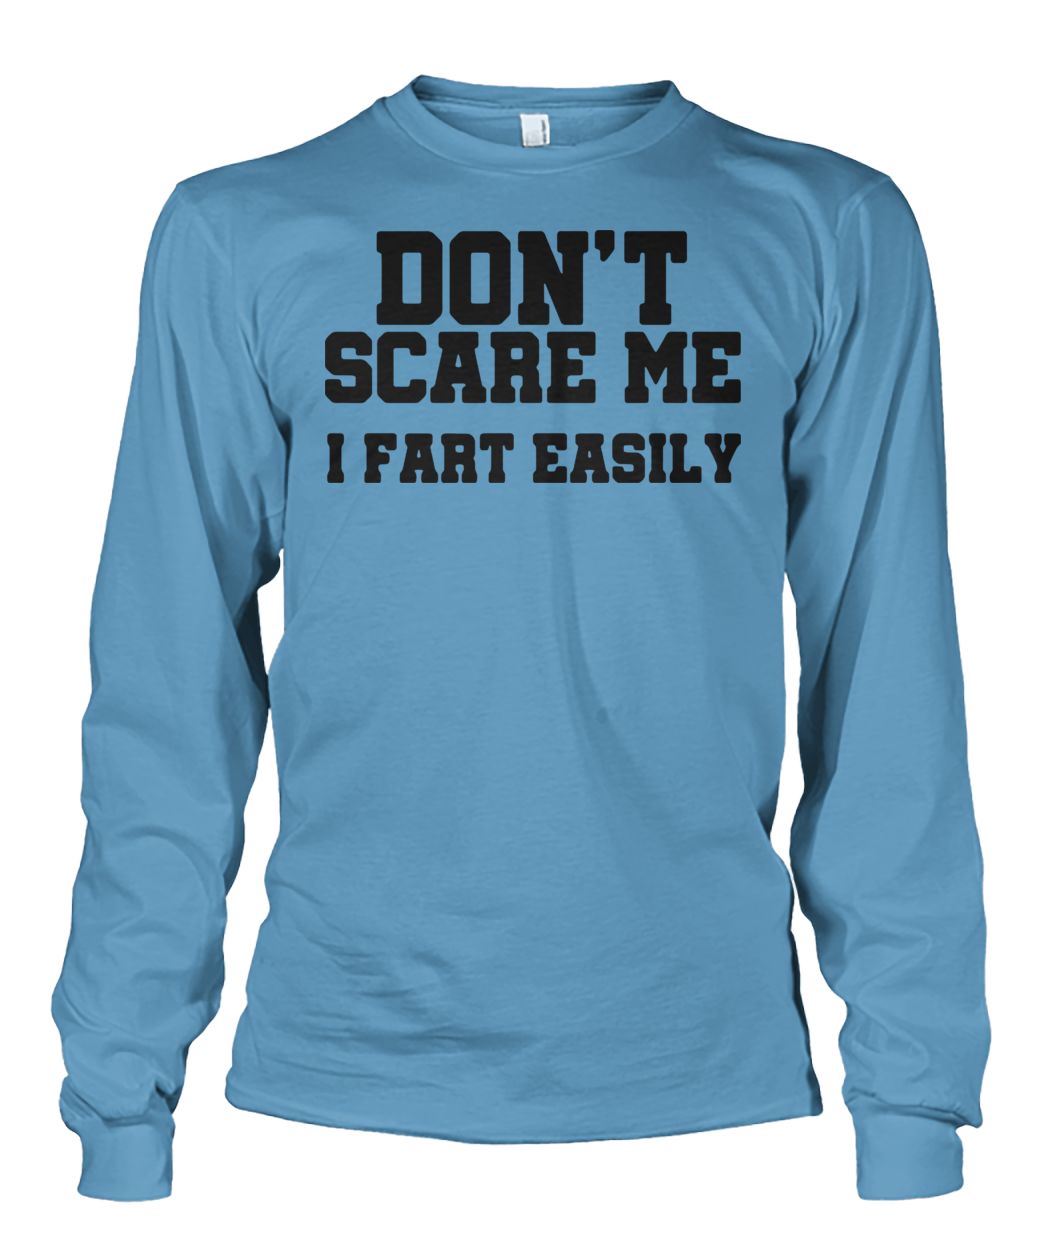 Don't scare me I fart easily unisex long sleeve